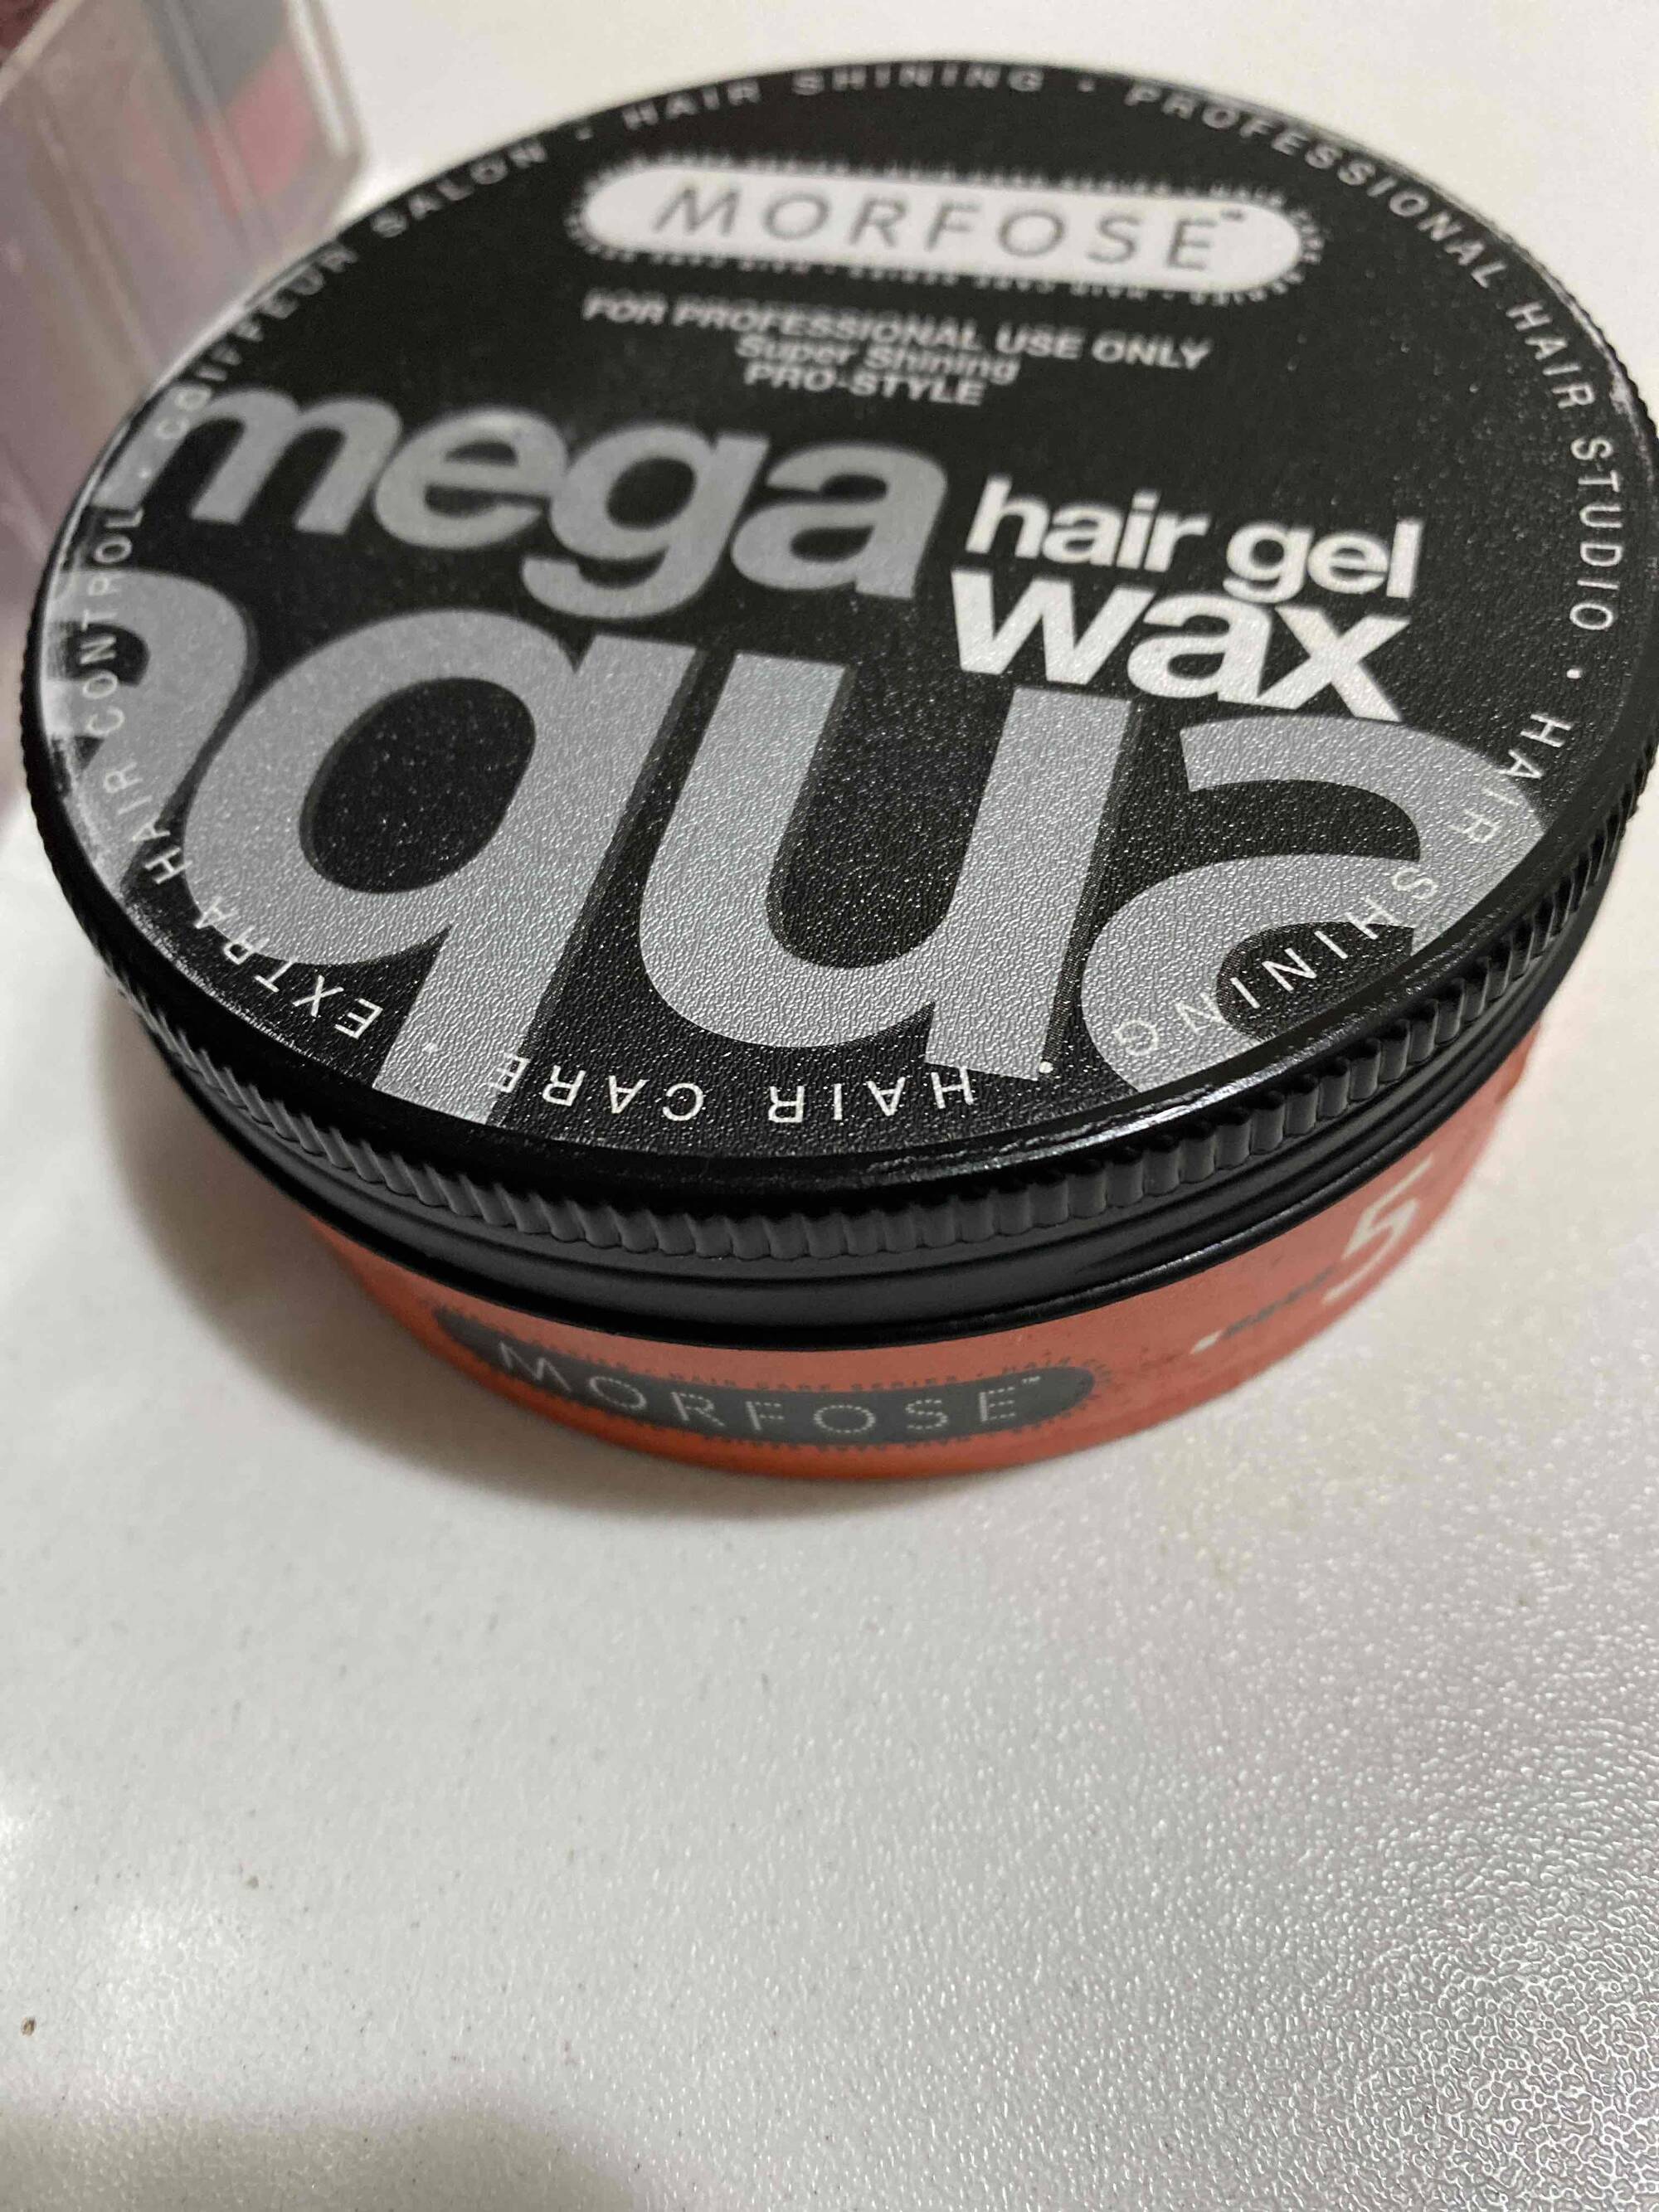 MORFOSE - Mega aqua hair gel wax